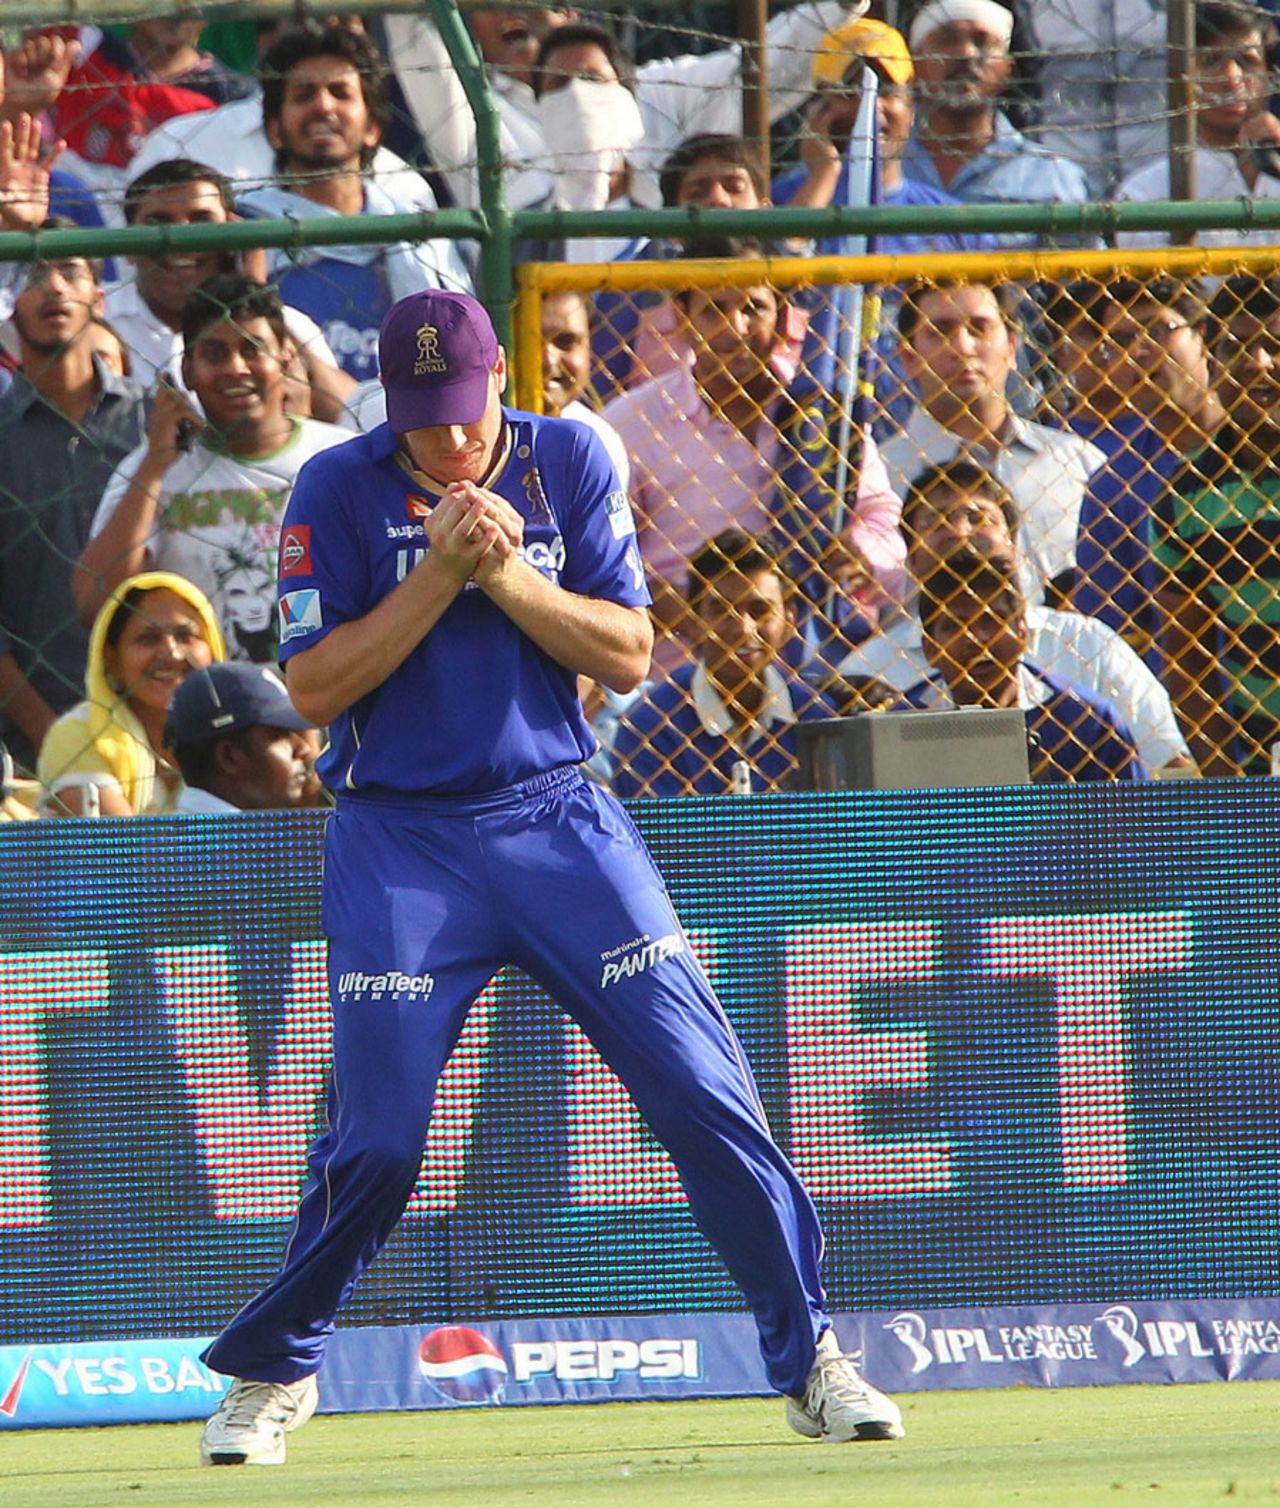 James Faulkner takes a catch to dismiss Virat Kohli, Rajasthan Royals v Royal Challengers Bangalore, IPL 2013, Jaipur, April 29, 2013